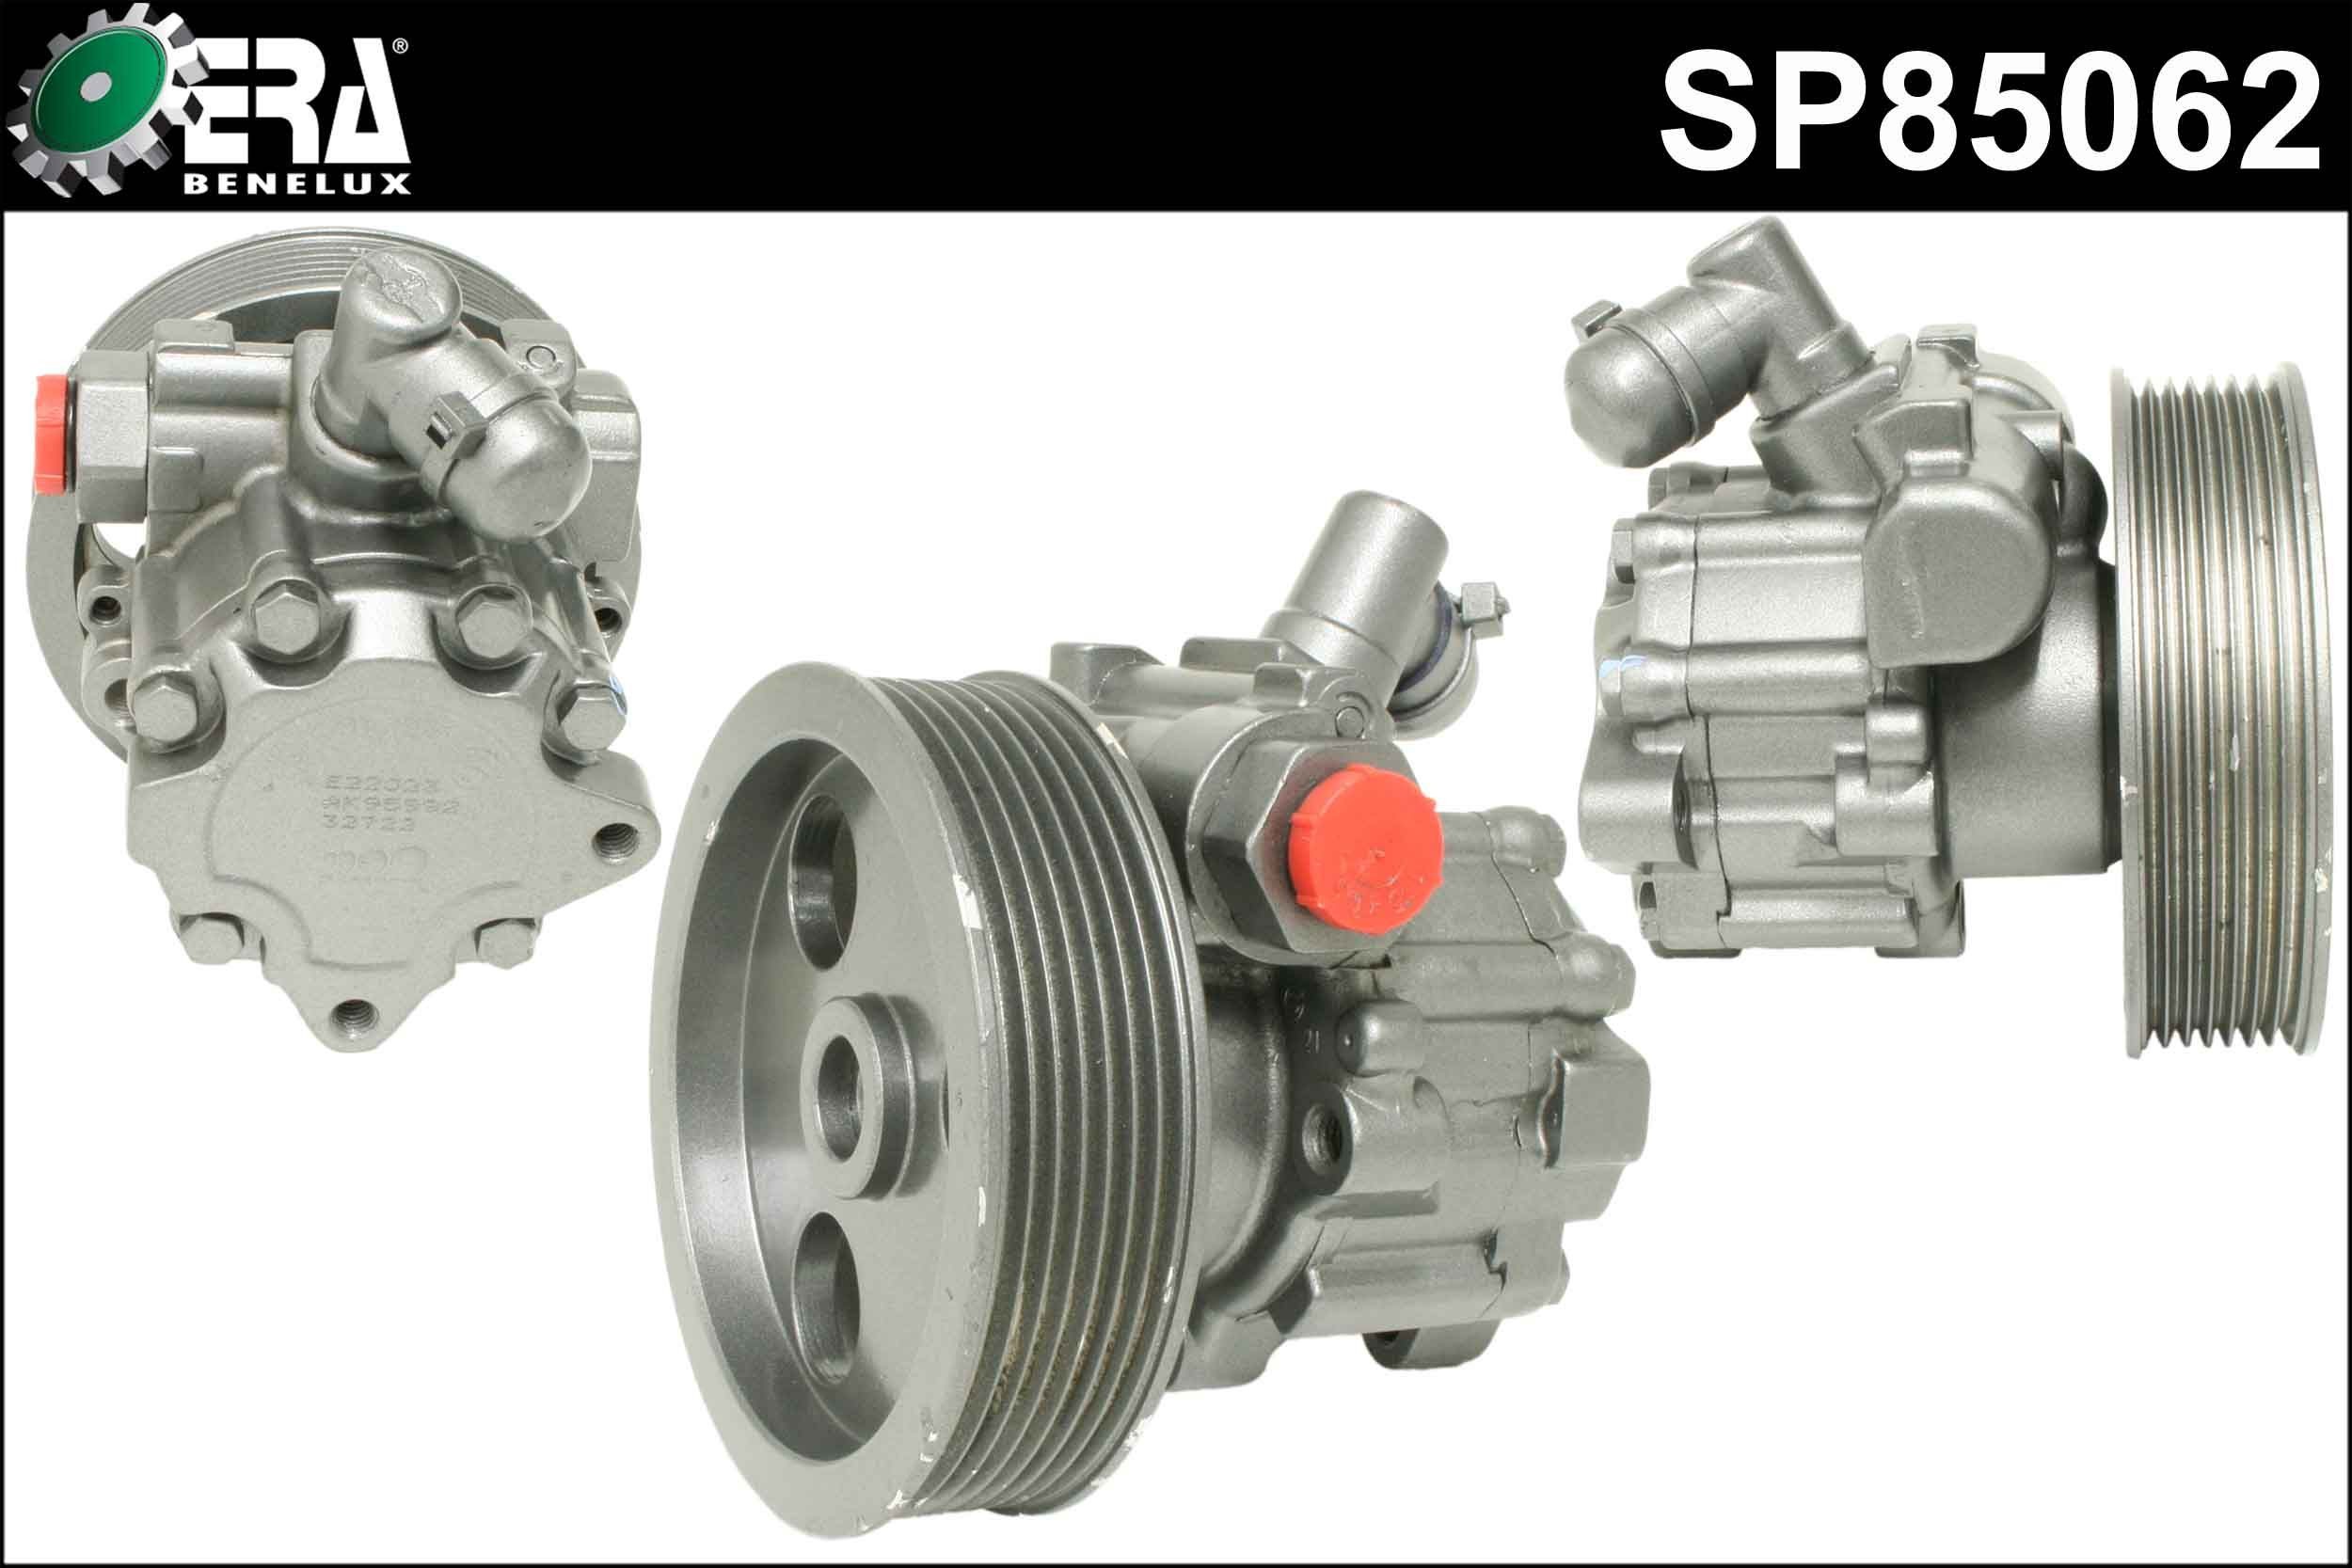 ERA Benelux SP85062 Hydraulic steering pump W164 ML 320 CDI 3.0 4-matic 224 hp Diesel 2009 price